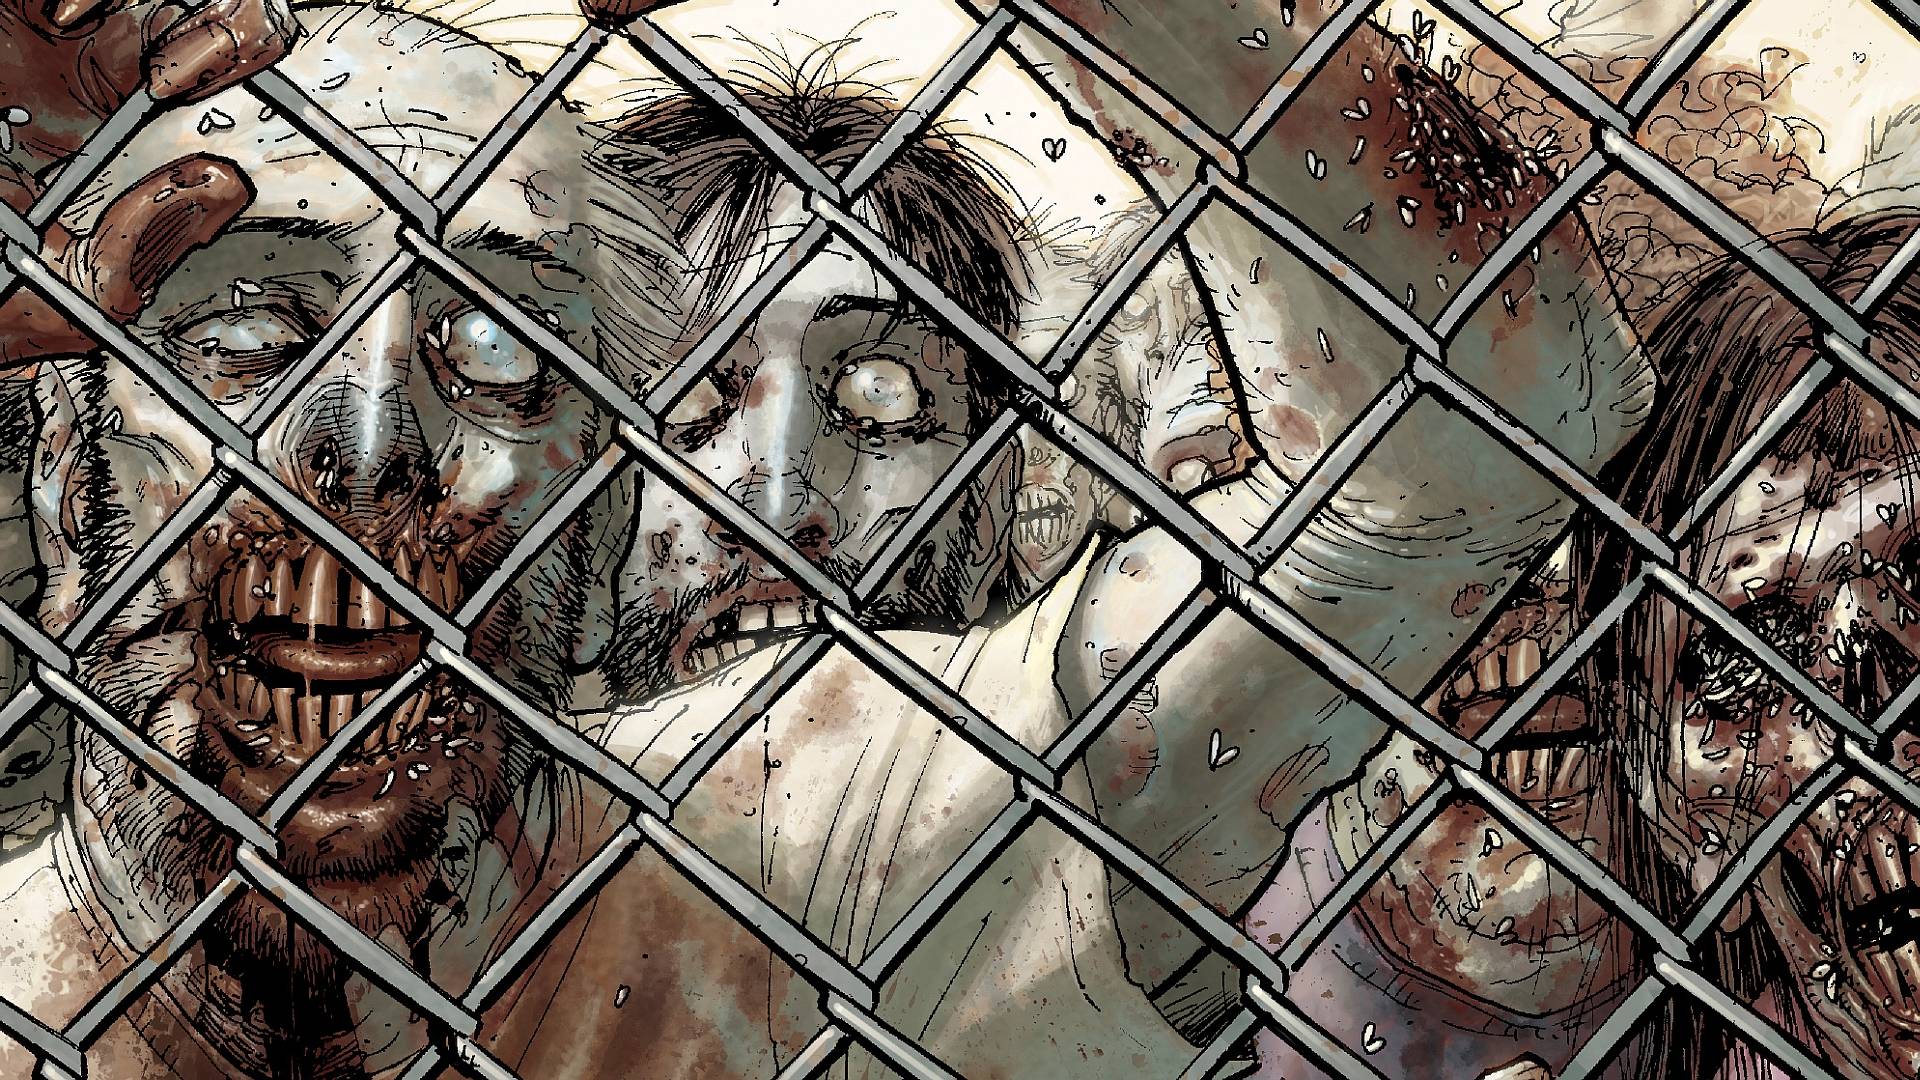 Comics The Walking Dead Wallpaper 1280x800 px Free Download